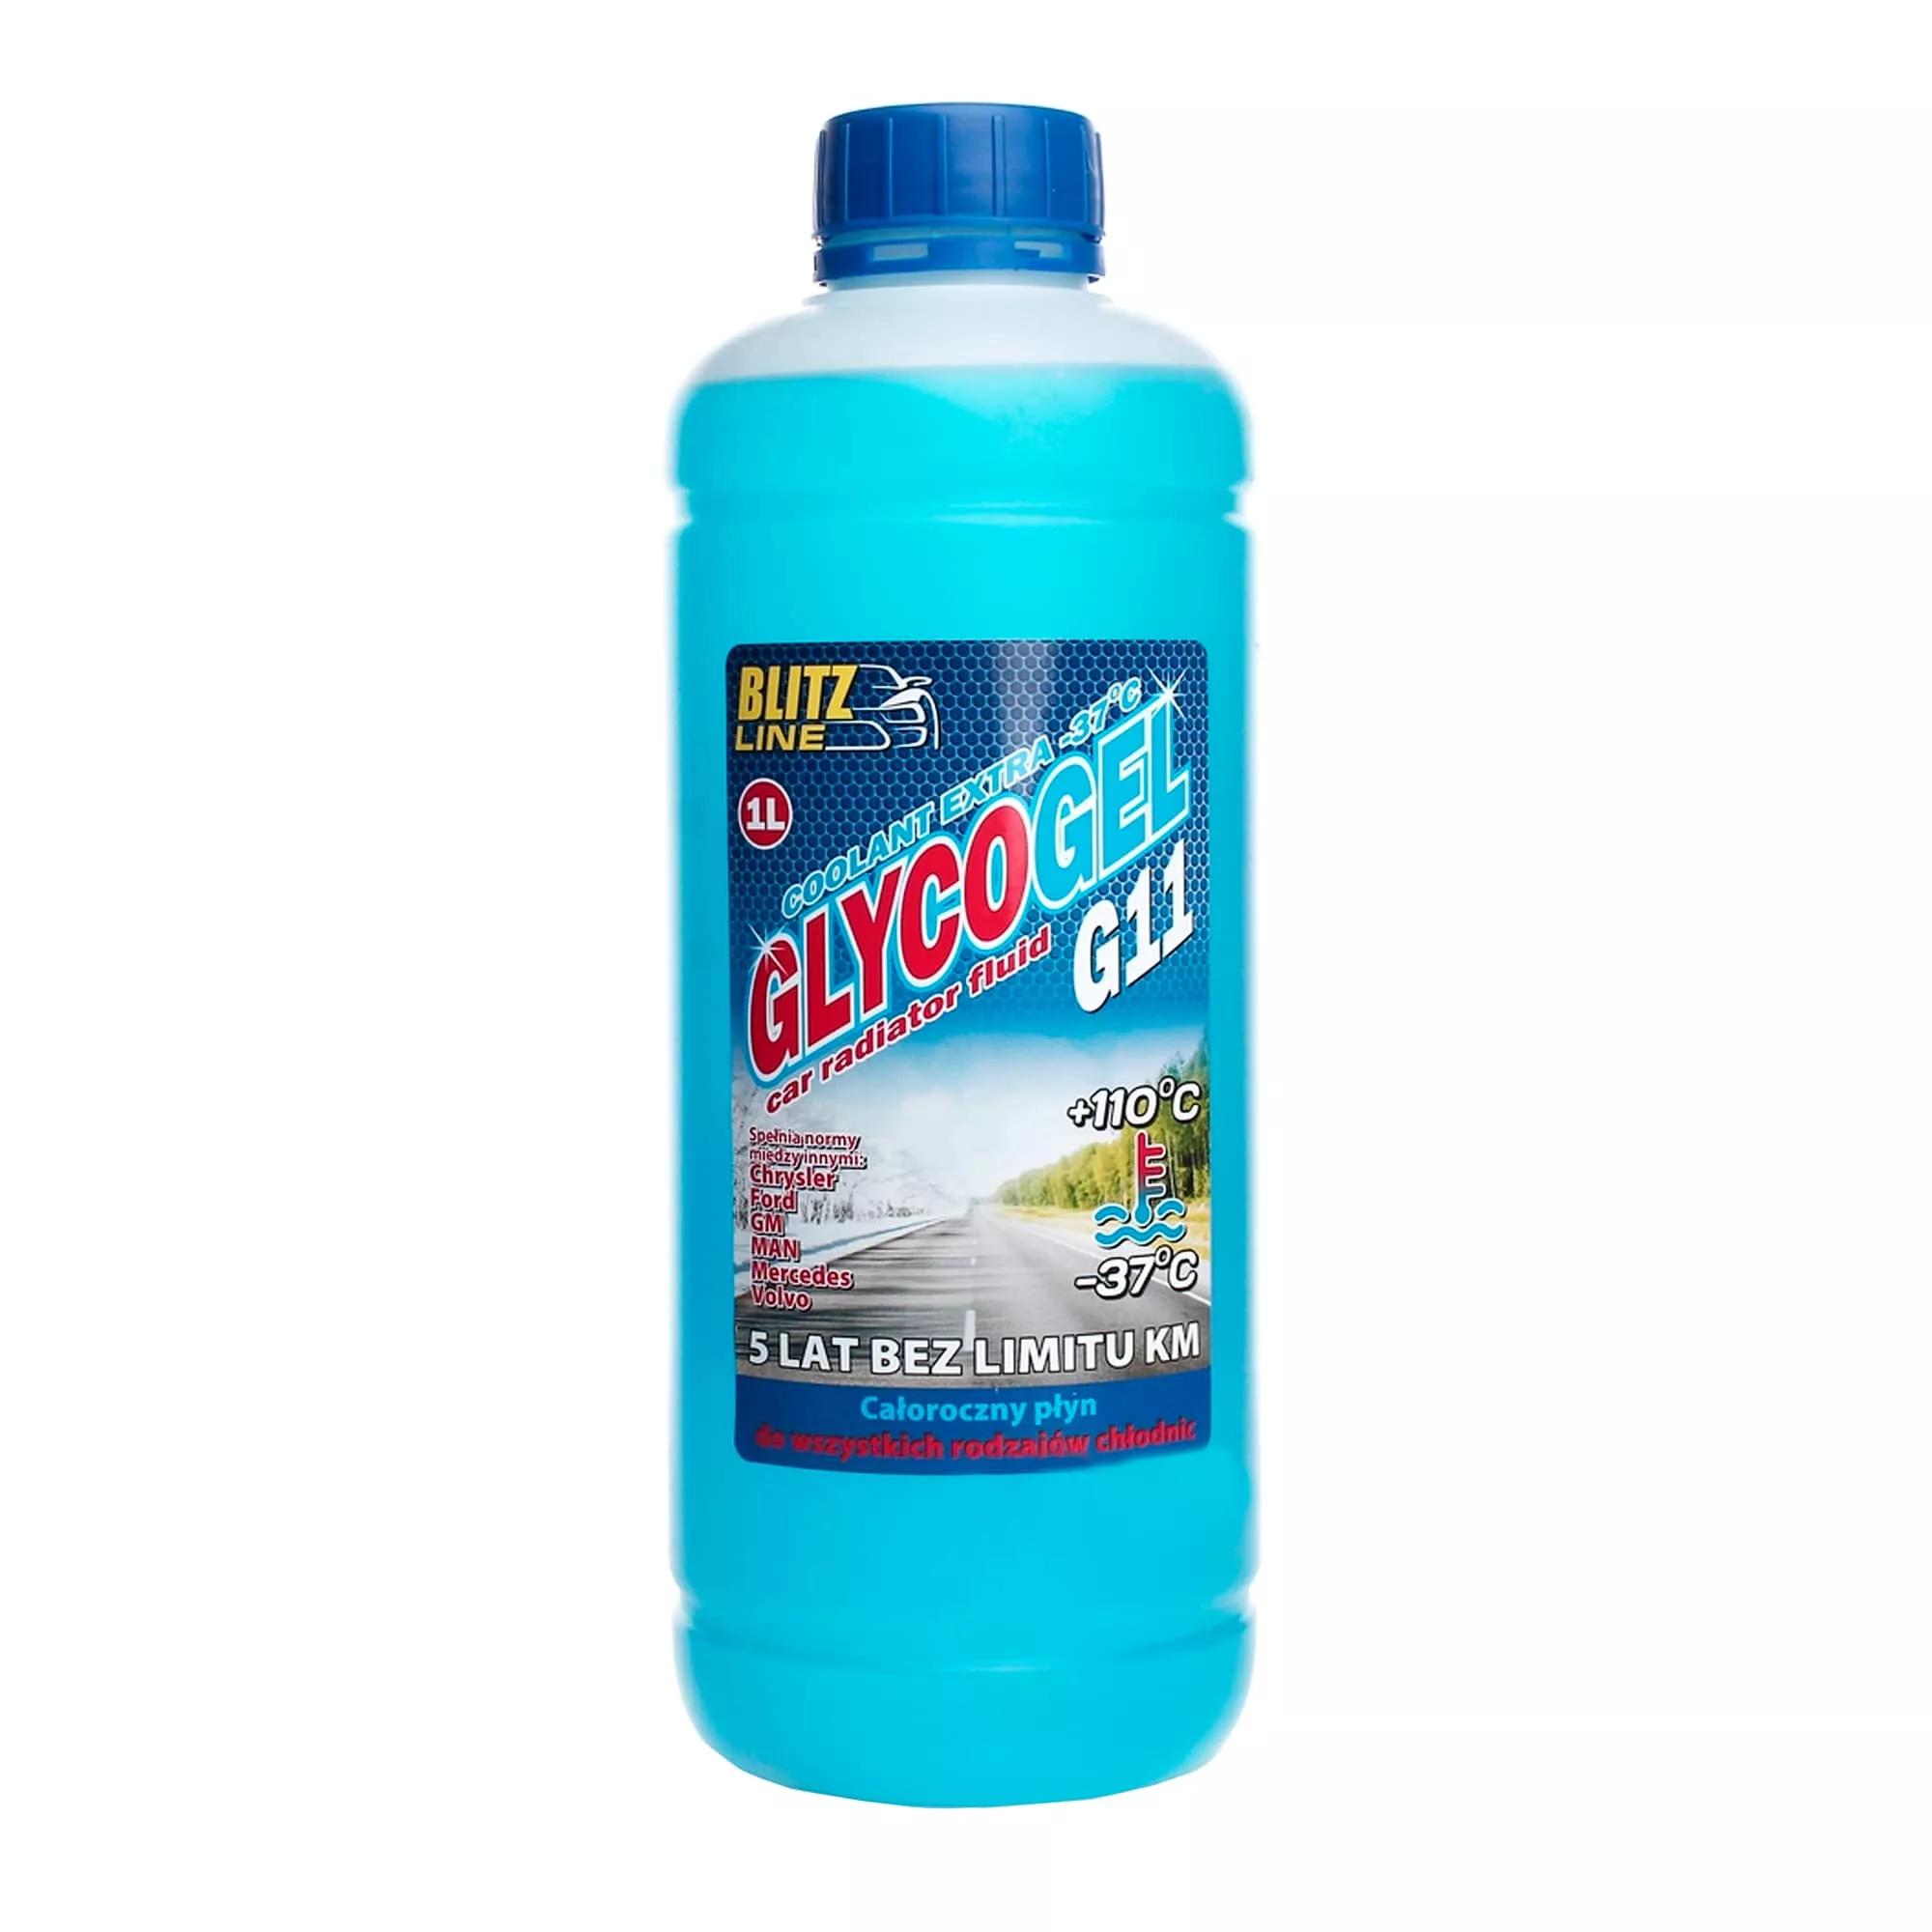 Антифриз Blitz Line Glycogel G11 -37°C синий 1л (BioLine Poland) (26156)